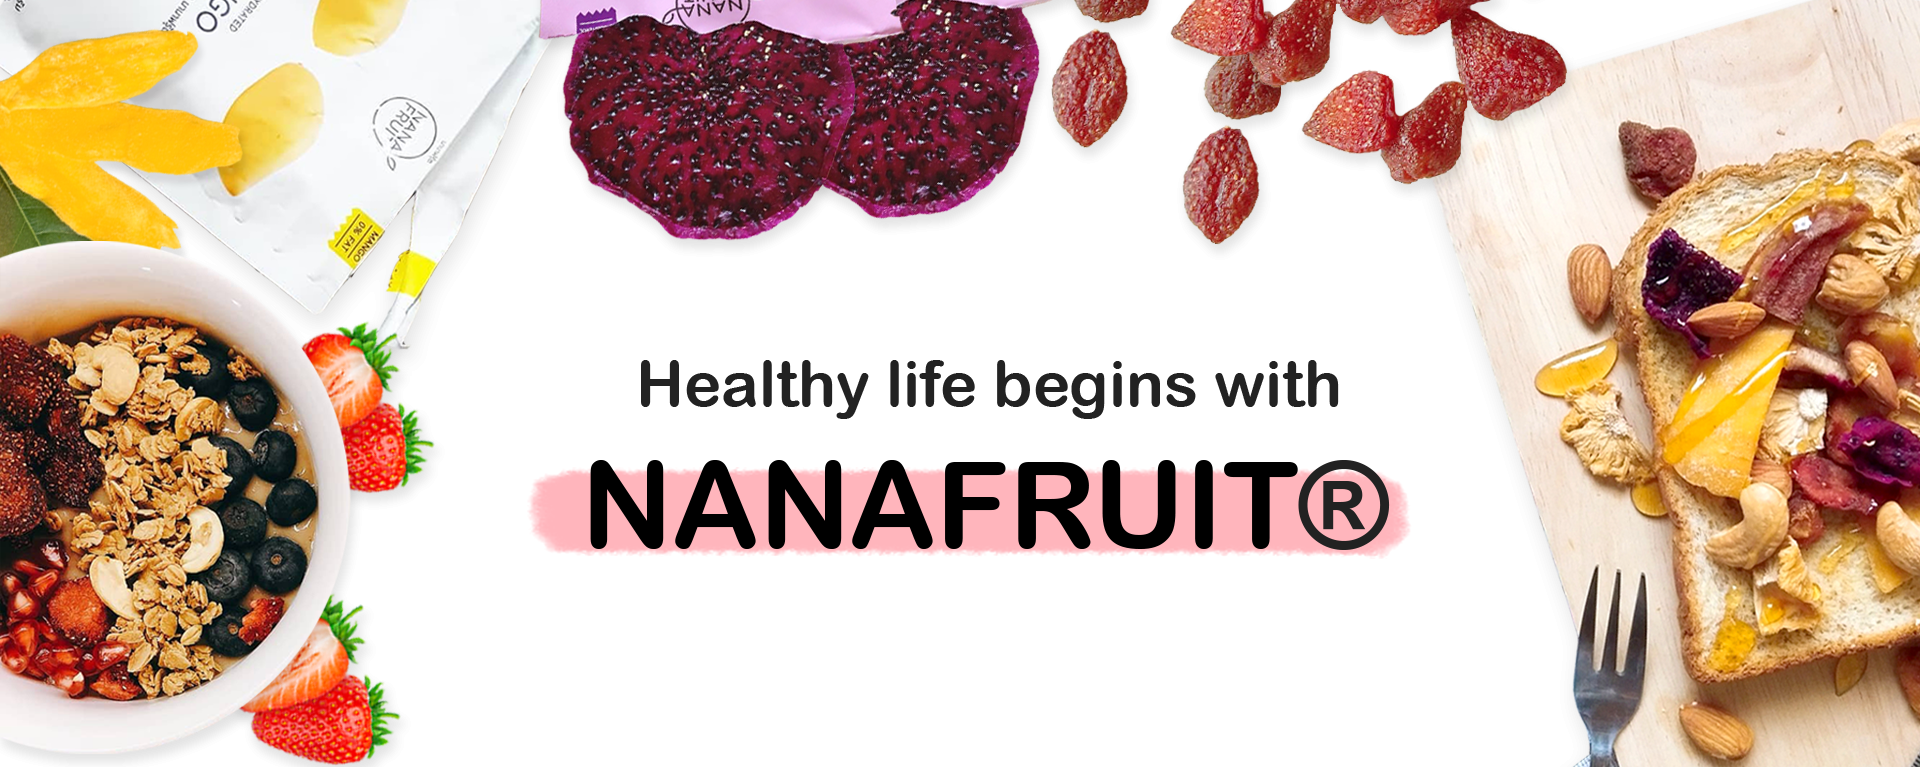 nanafruit healthy snack